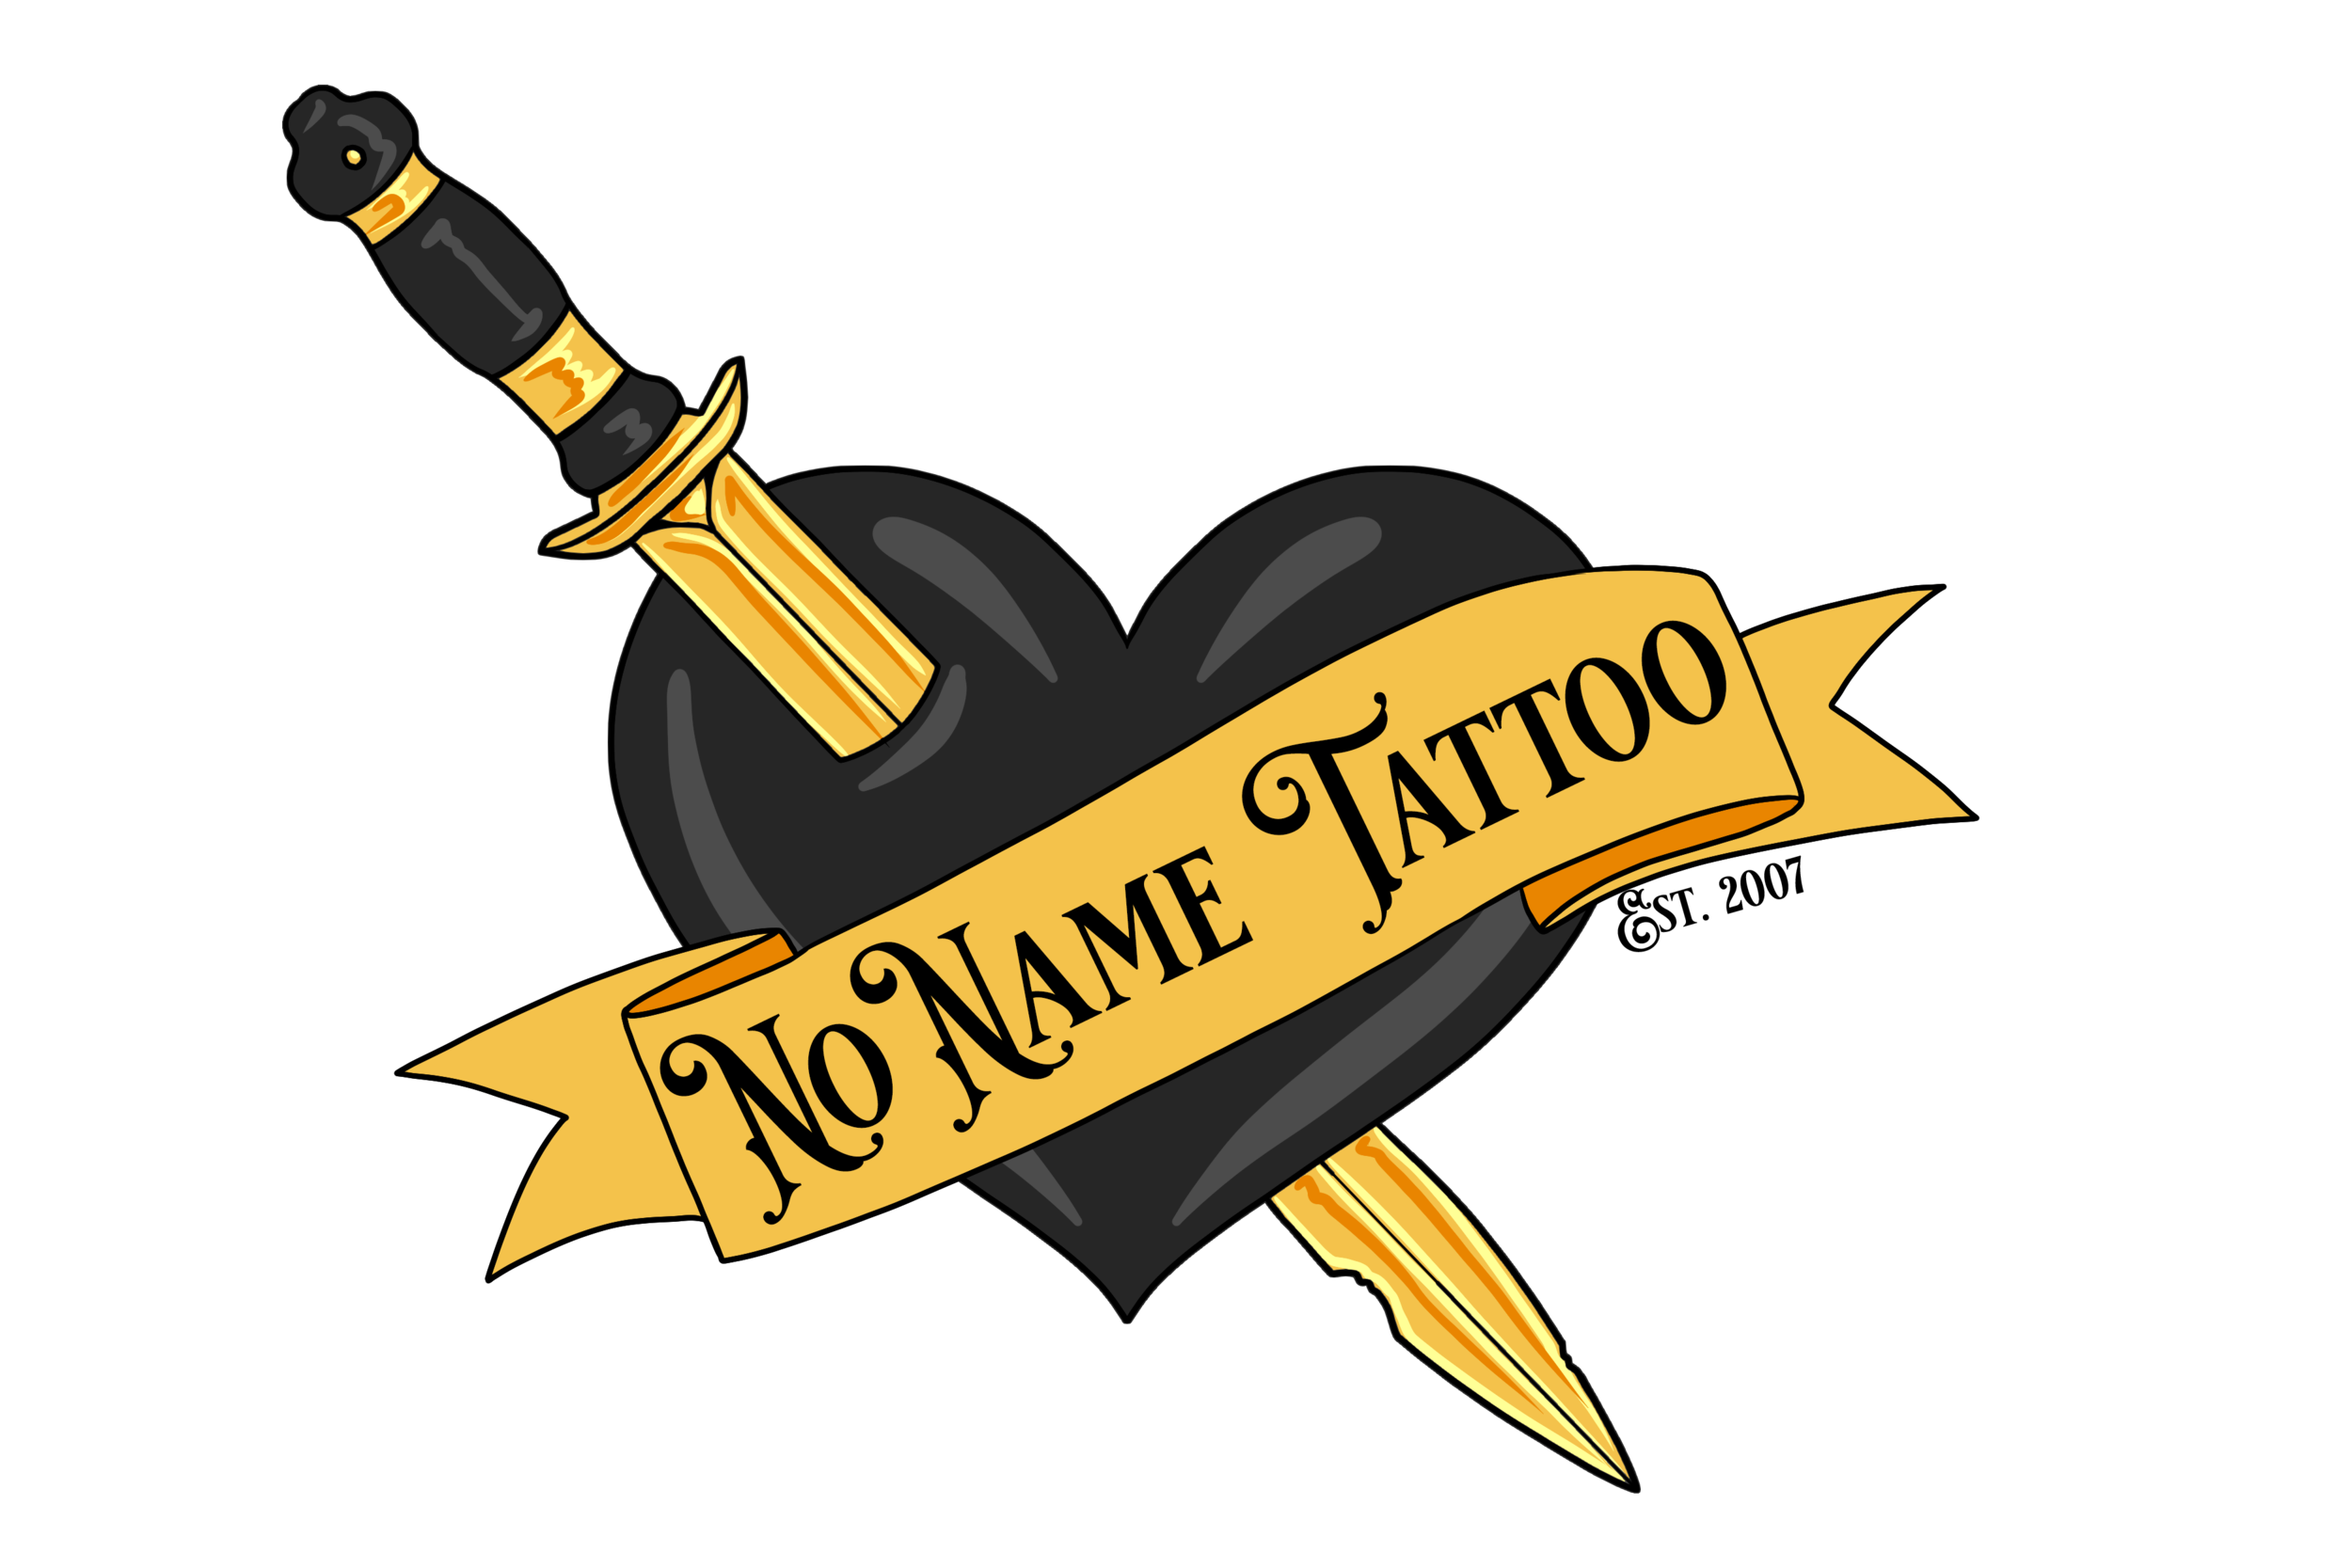 Crazy ink tattoo  Body piercing on Twitter RAVI NAME TATTOO DESIGN Ravi name  tattoo design by artist For more info visithttpstcoY9FUbbvMuv  httpstco8da2xE72mM  Twitter